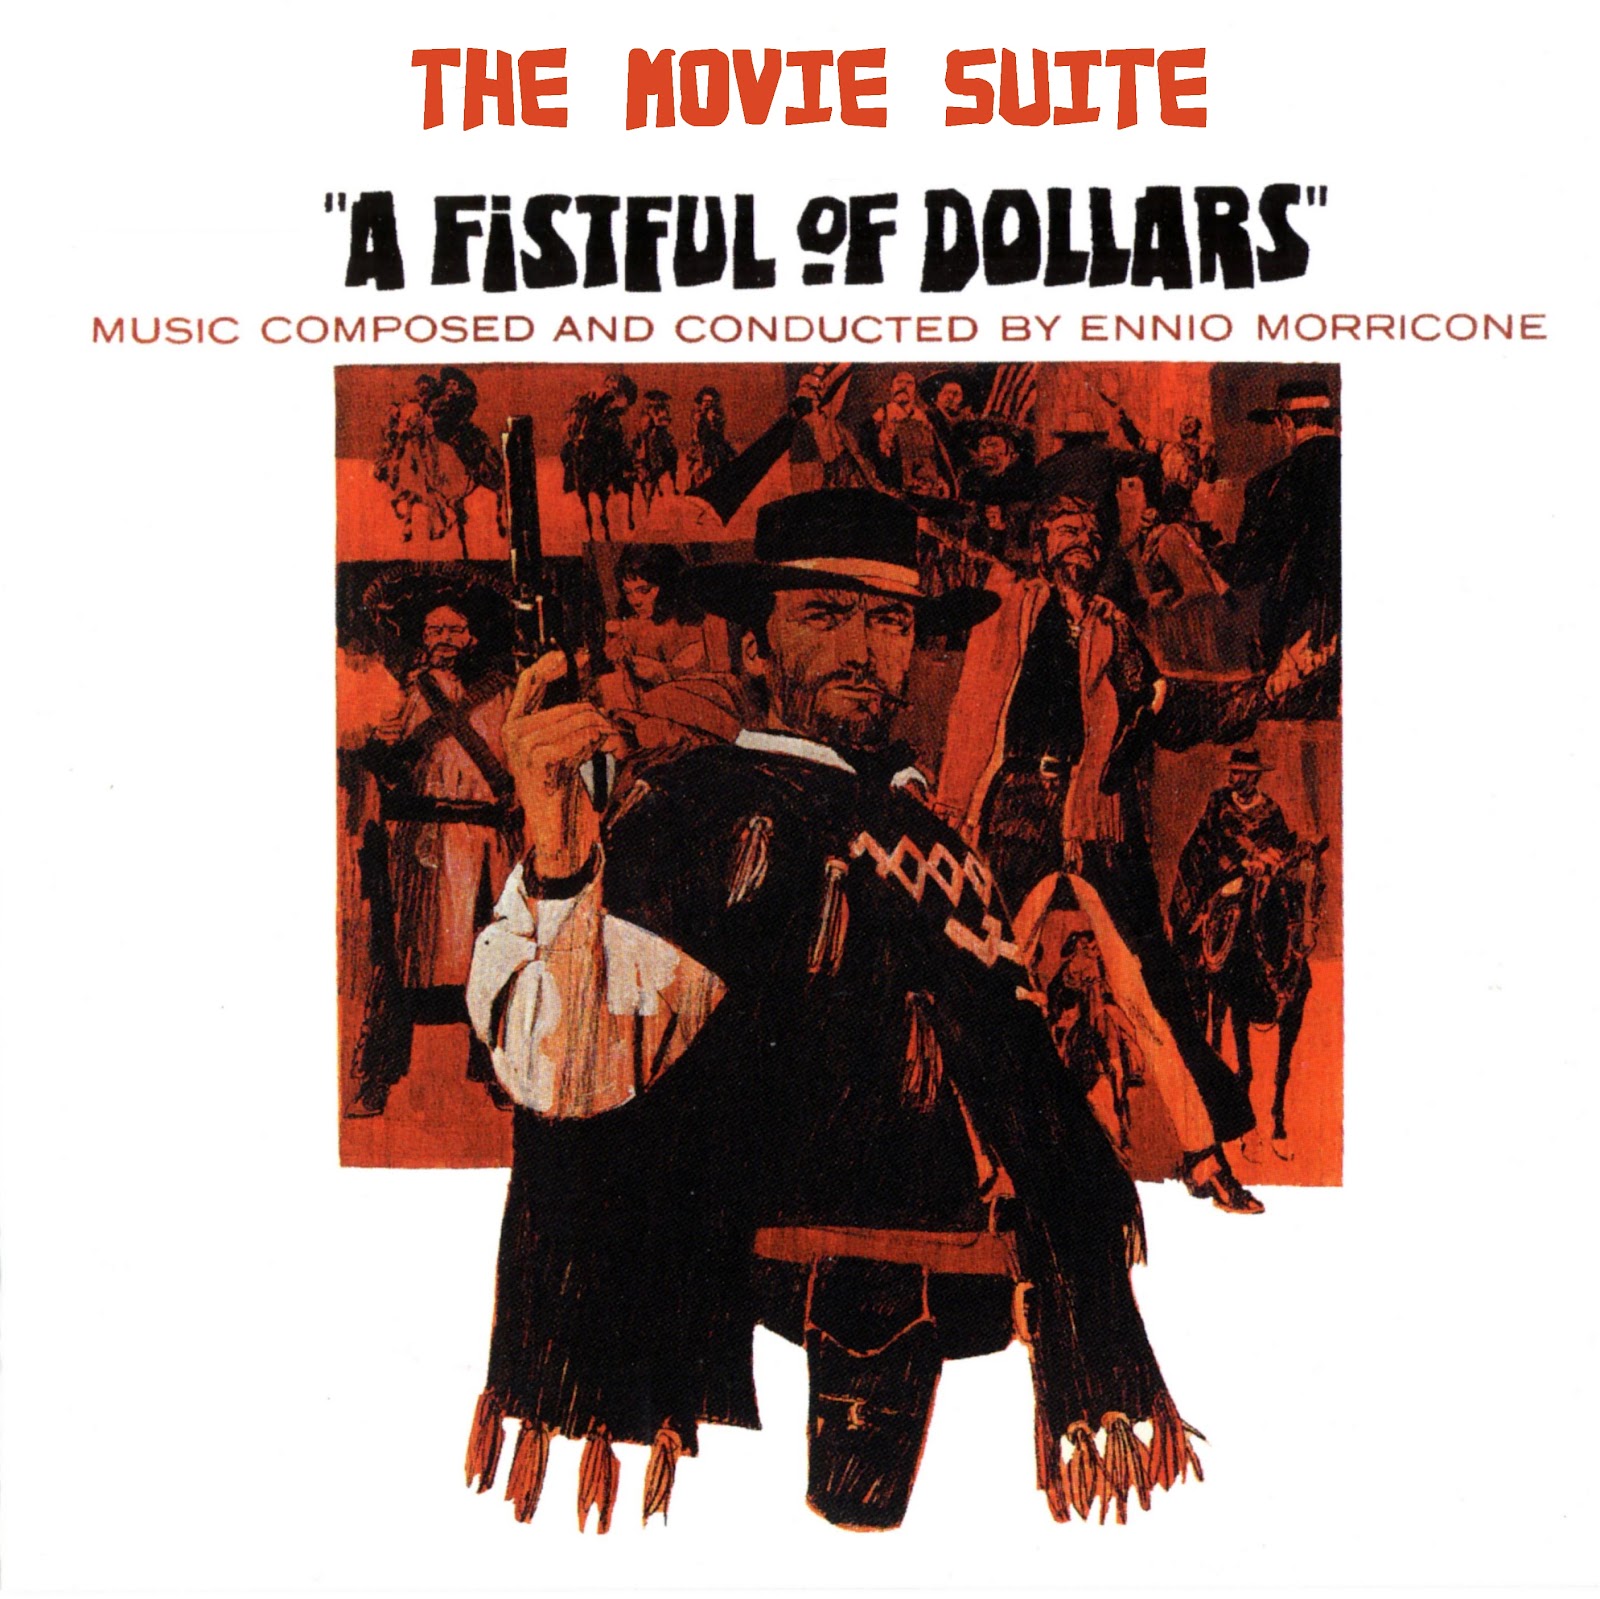 A Fistful of Dollars - Ennio Morricone - YouTube